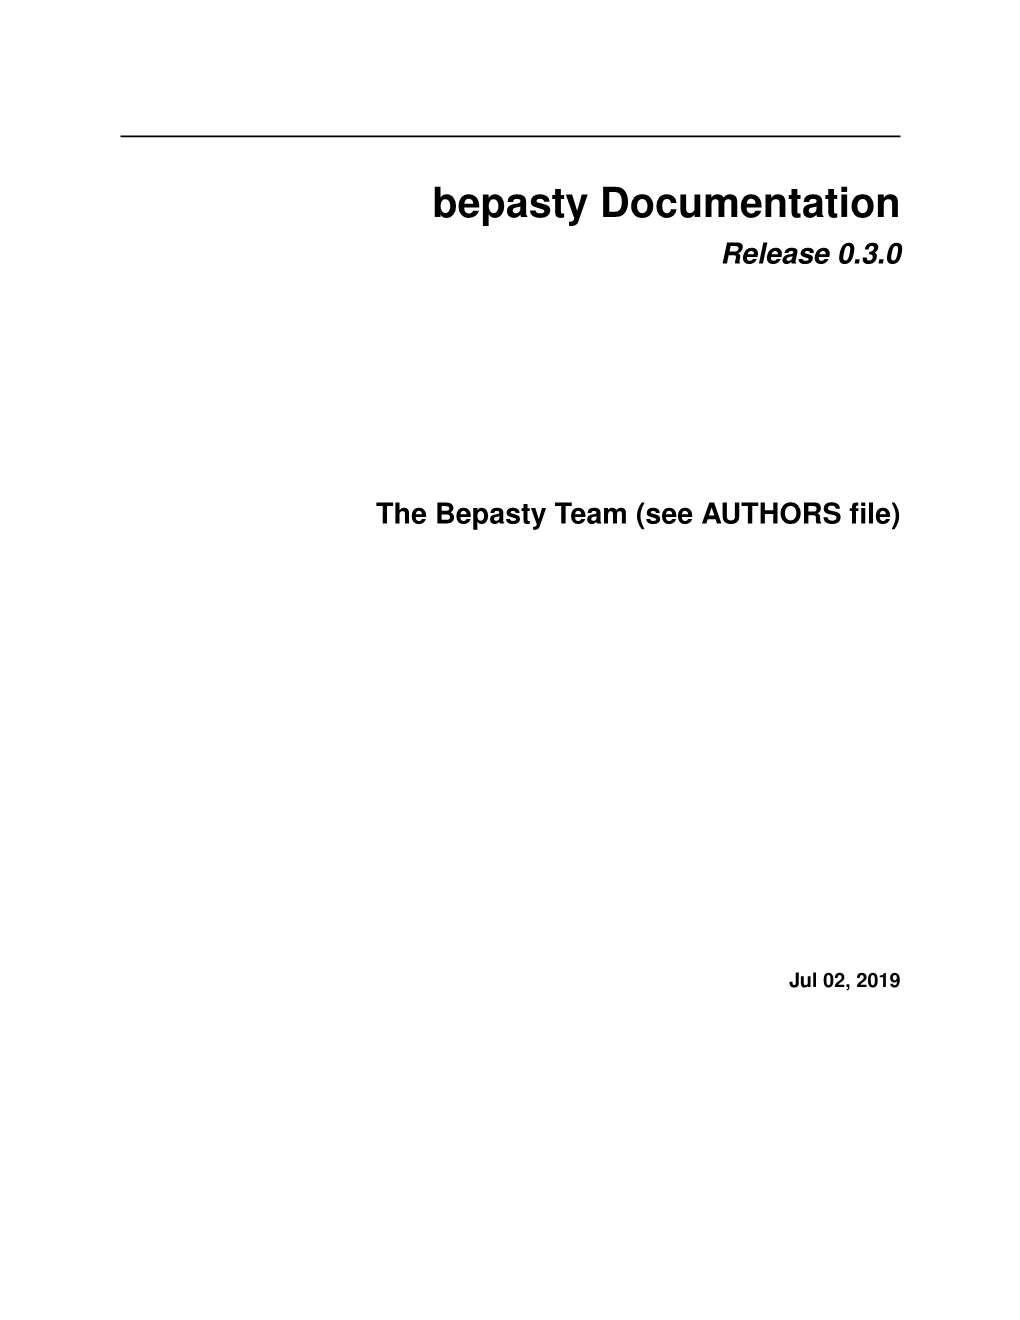 Bepasty Documentation Release 0.3.0